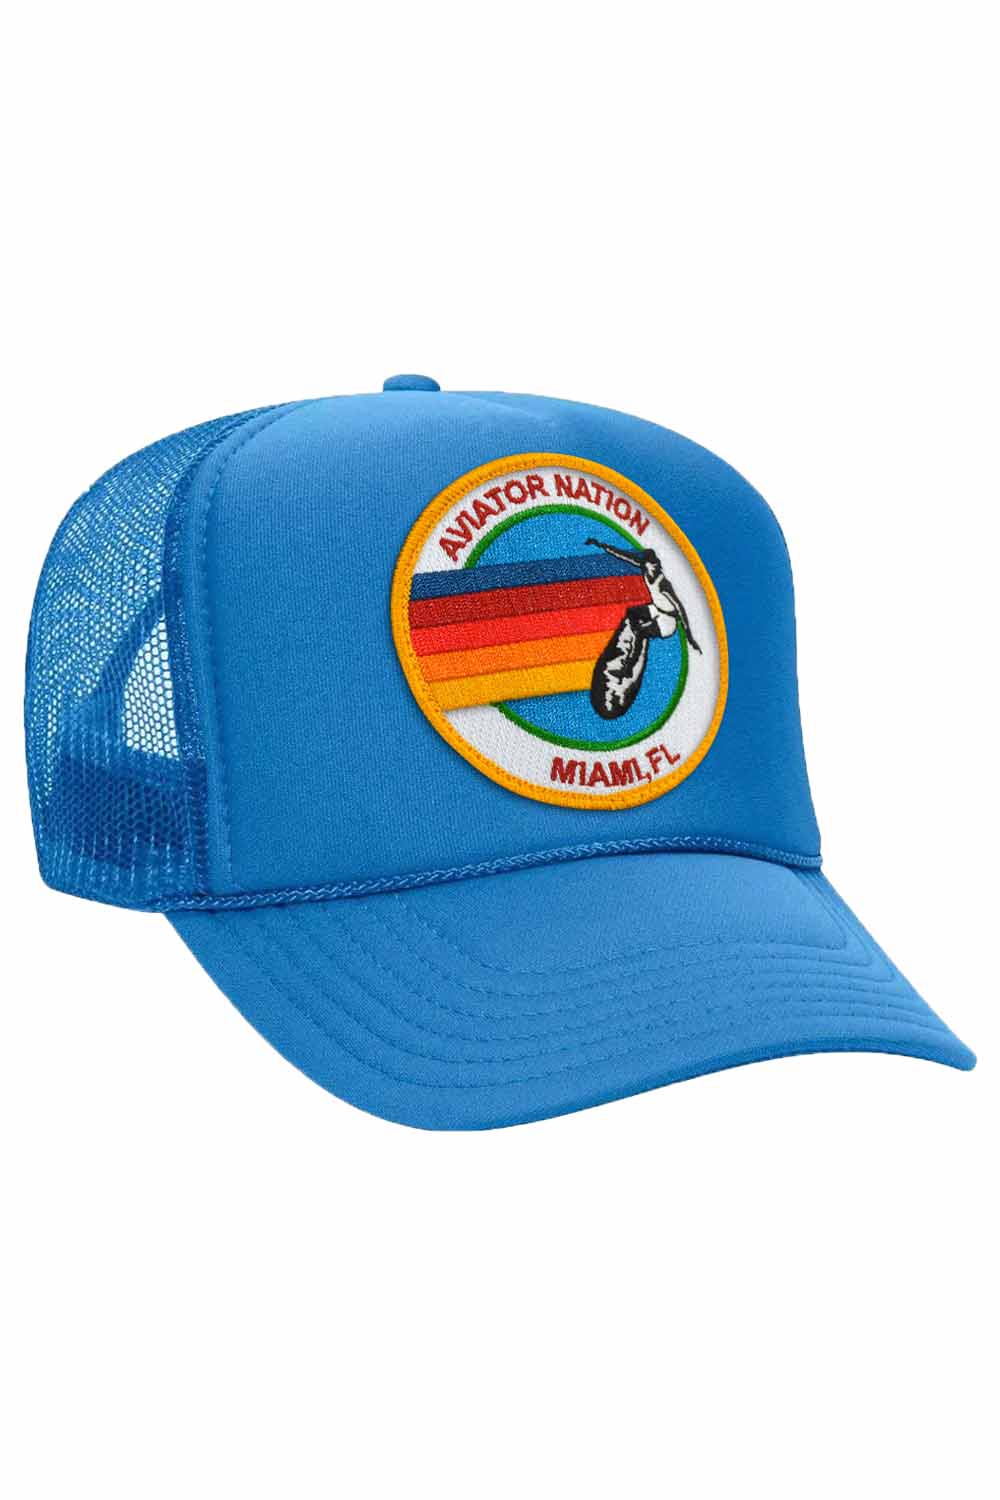 AVIATOR NATION MIAMI TRUCKER HAT HATS Aviator Nation OS LIGHT BLUE 